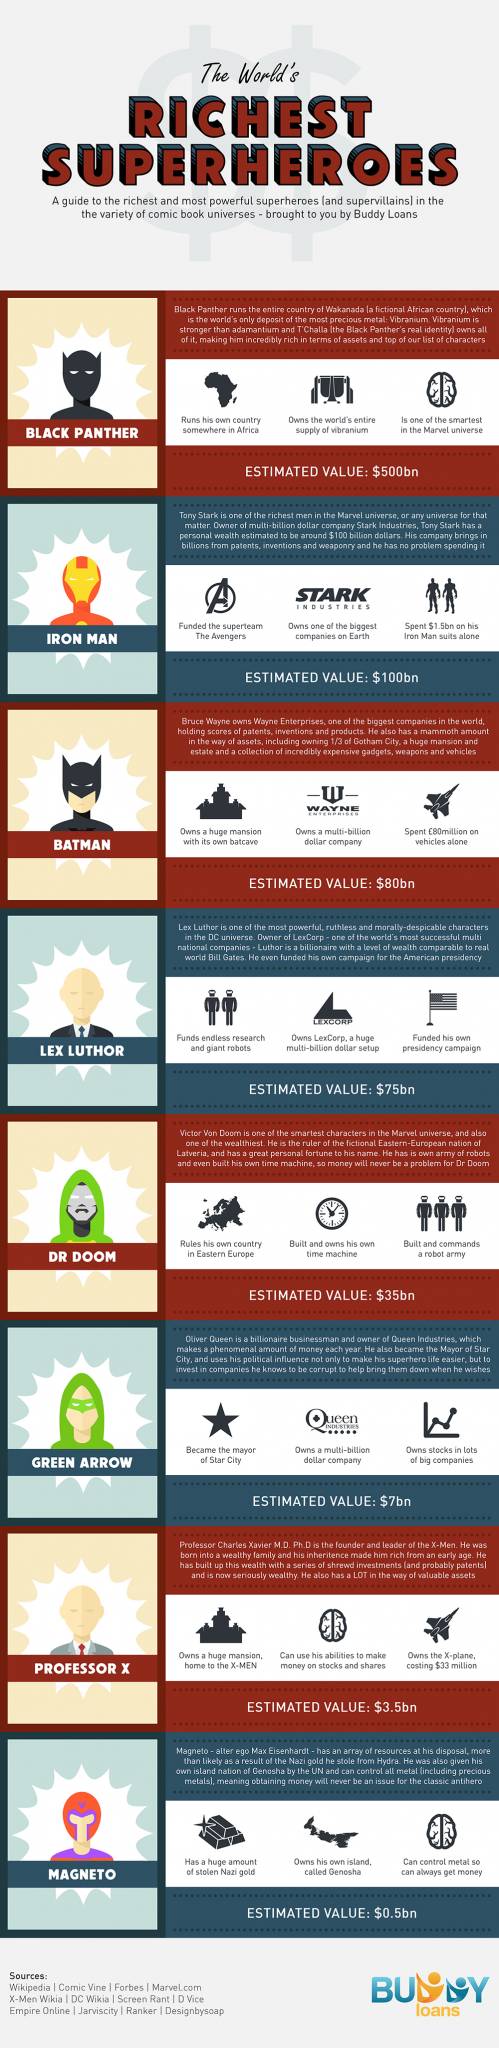 world's richest superheroes